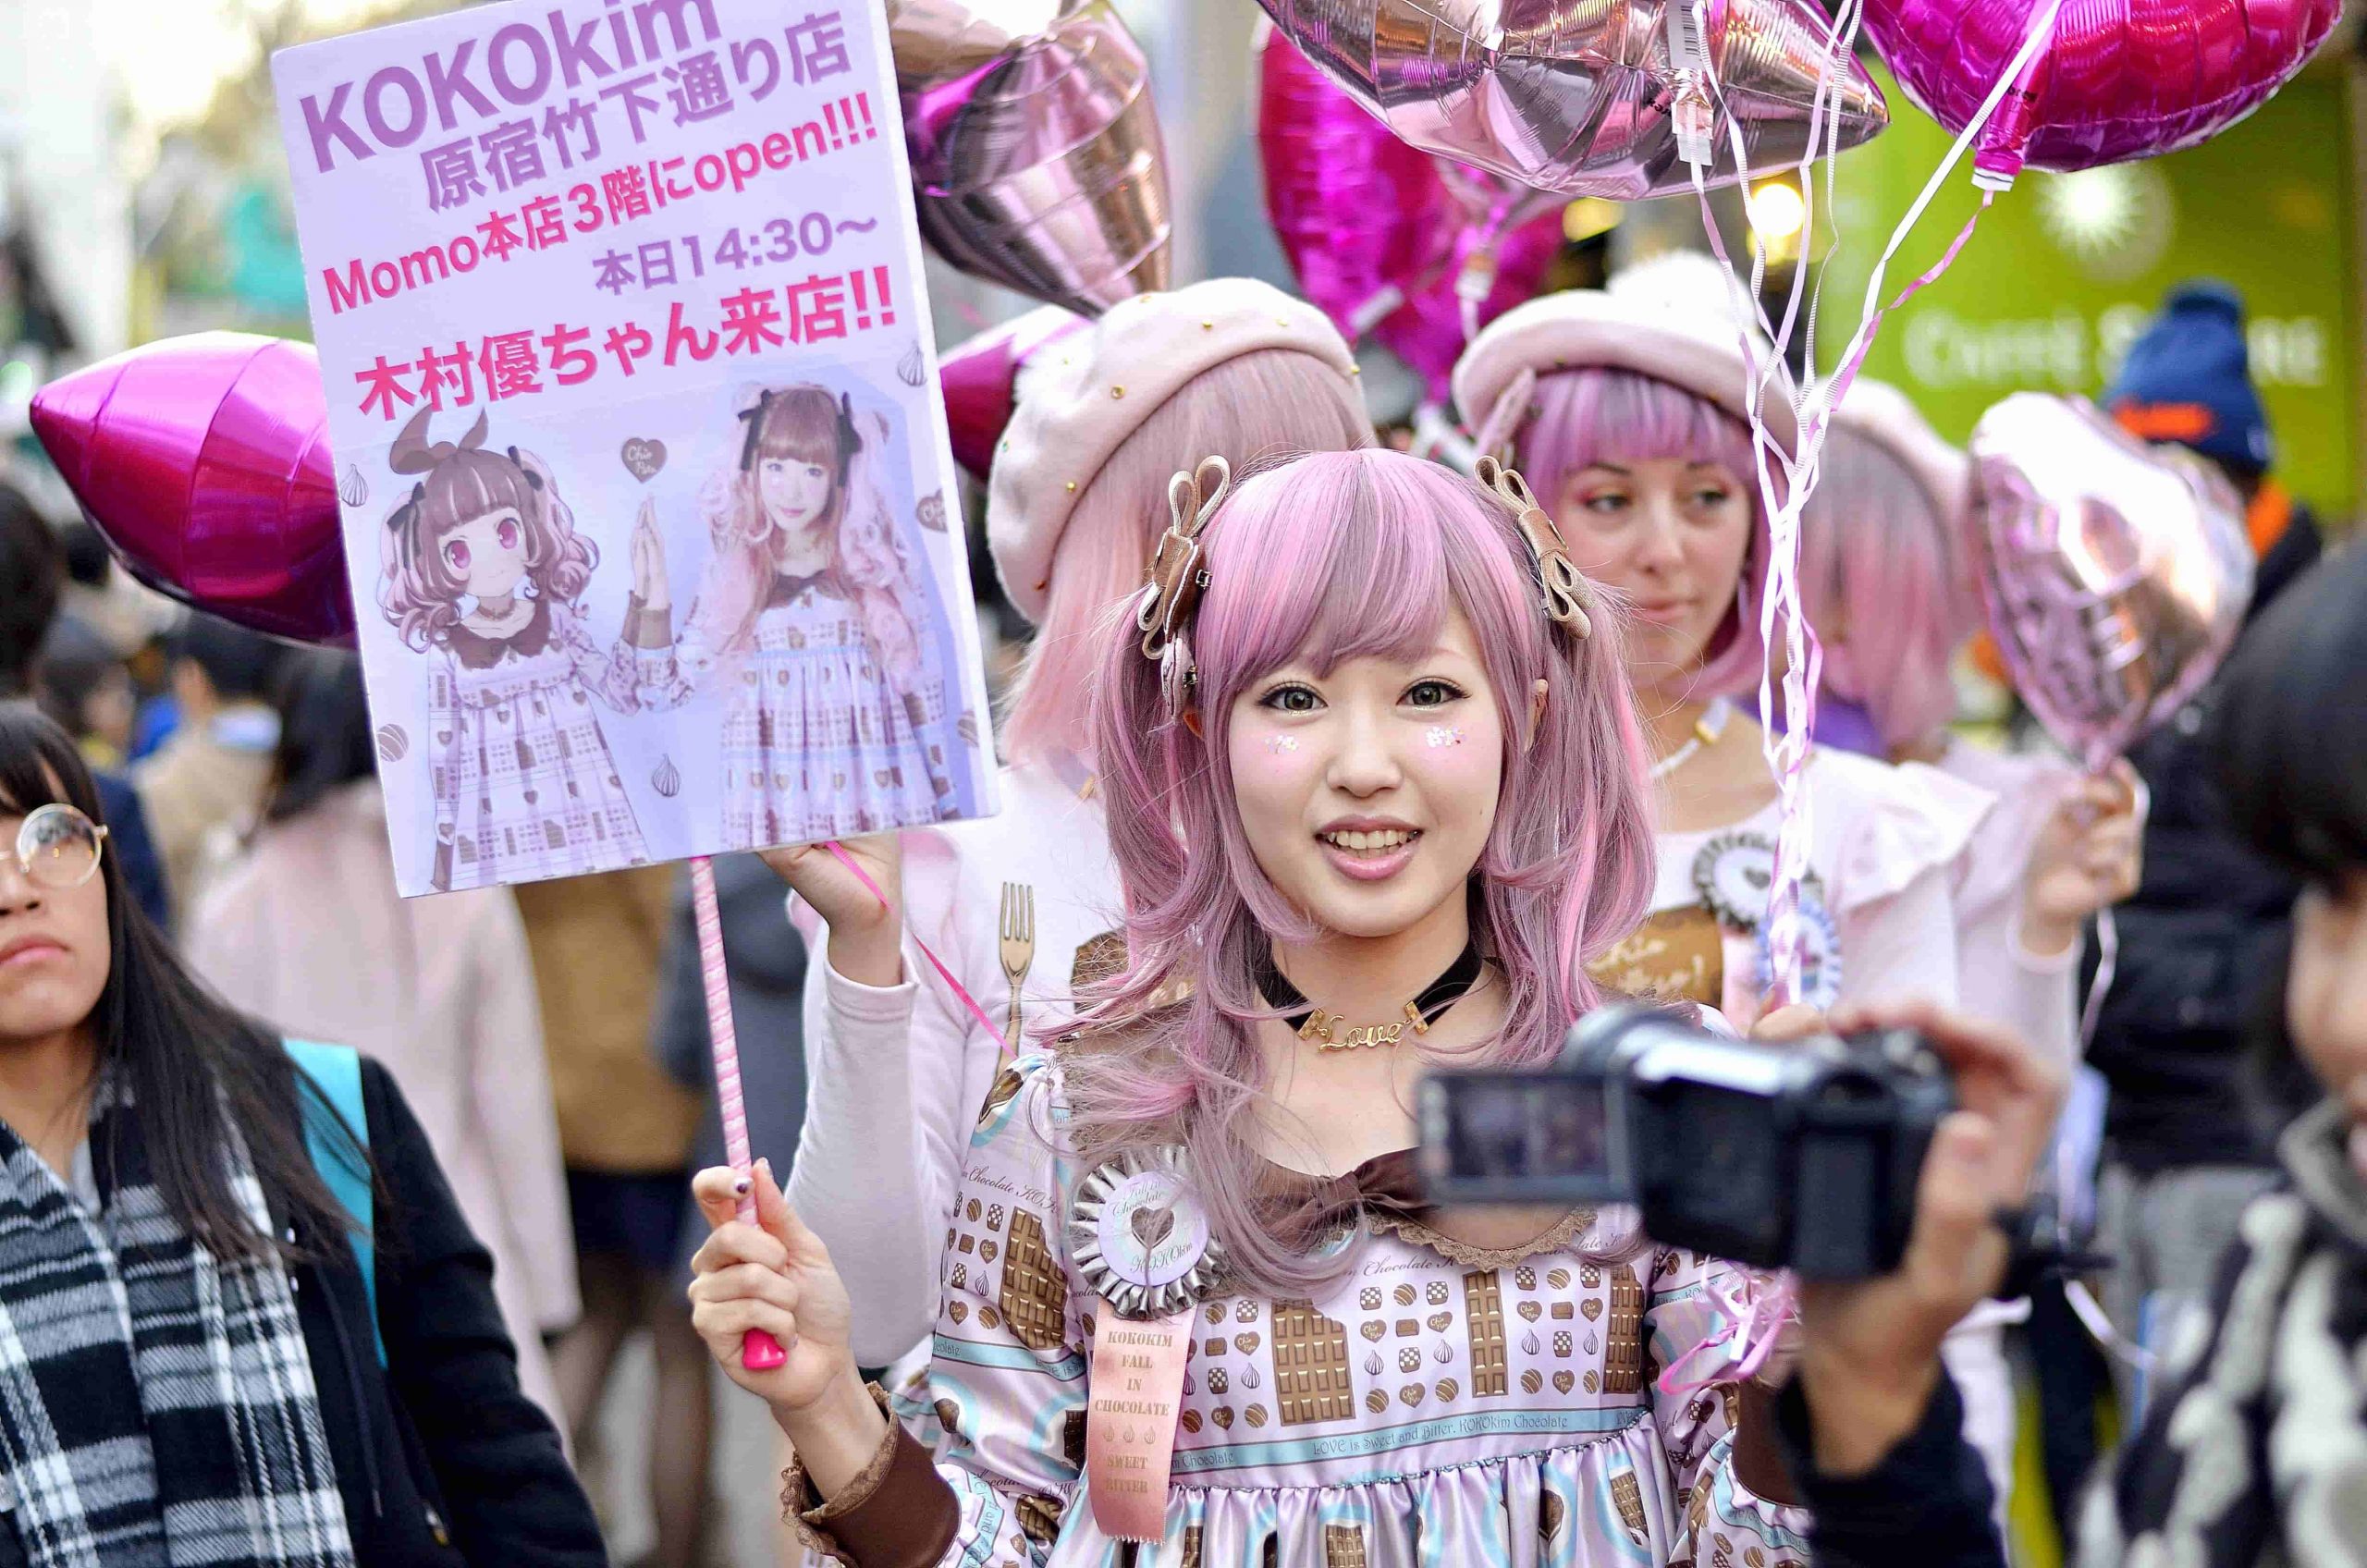 Harajuku fashion is popular in Osaka